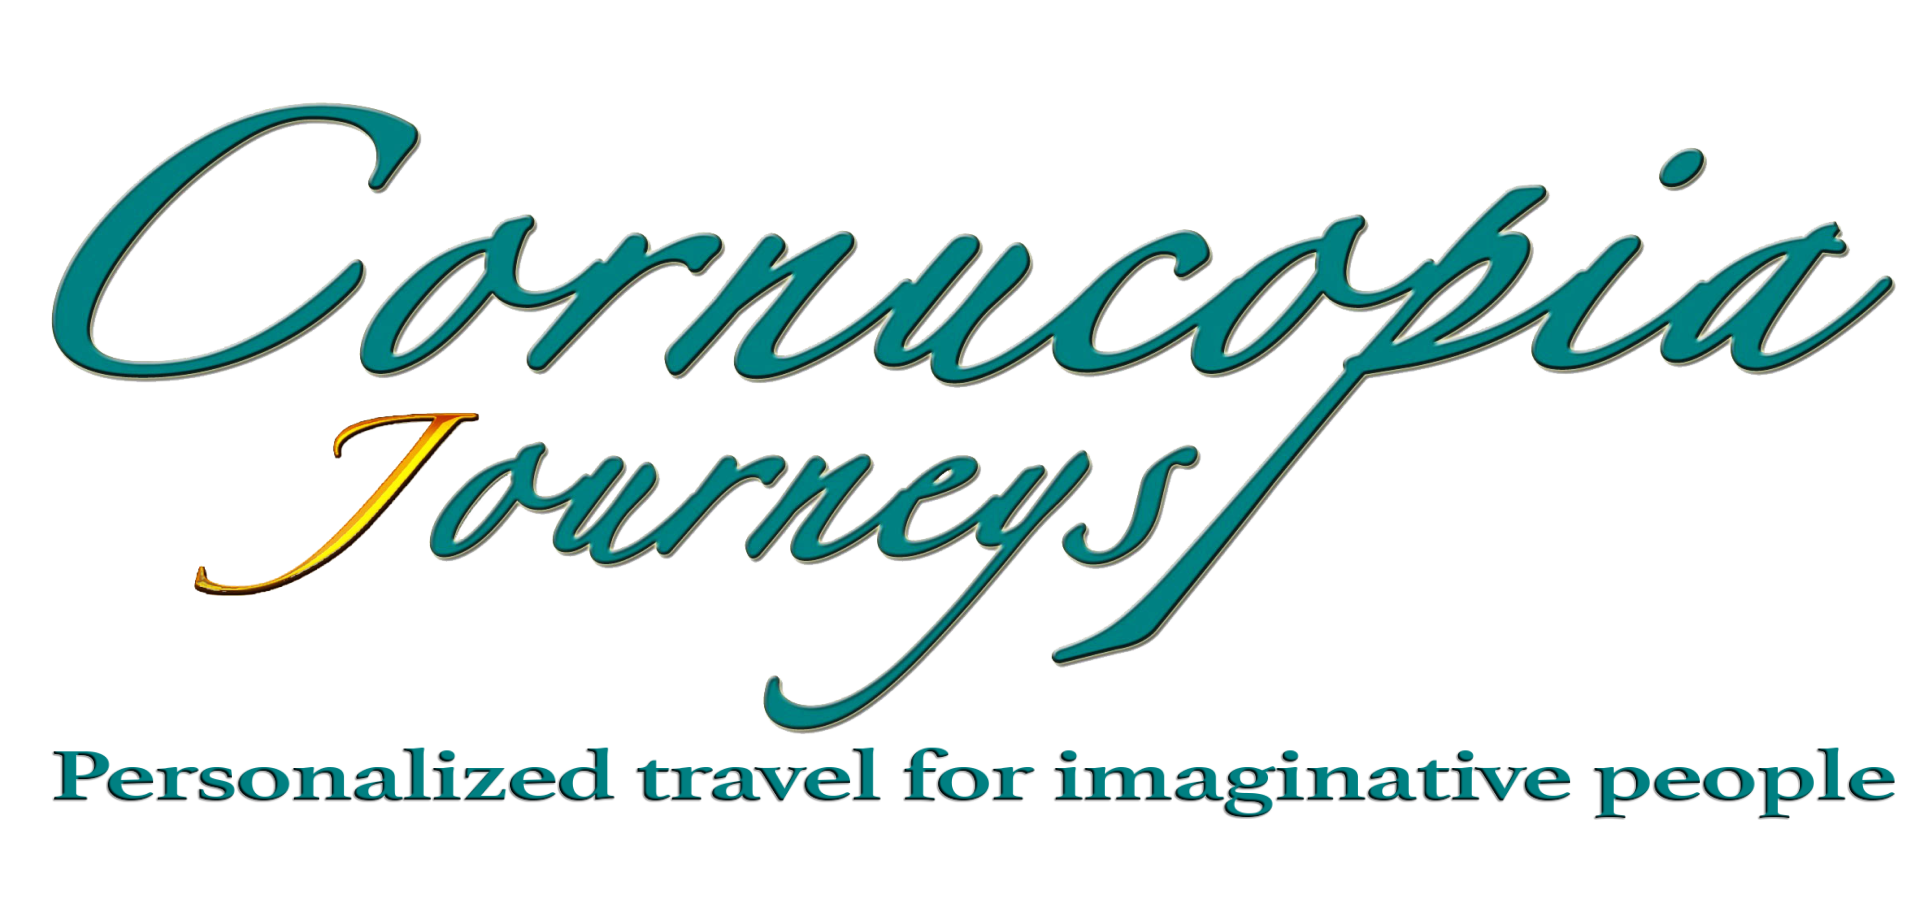 Cornucopia Journeys - Personalized travel for imaginative people